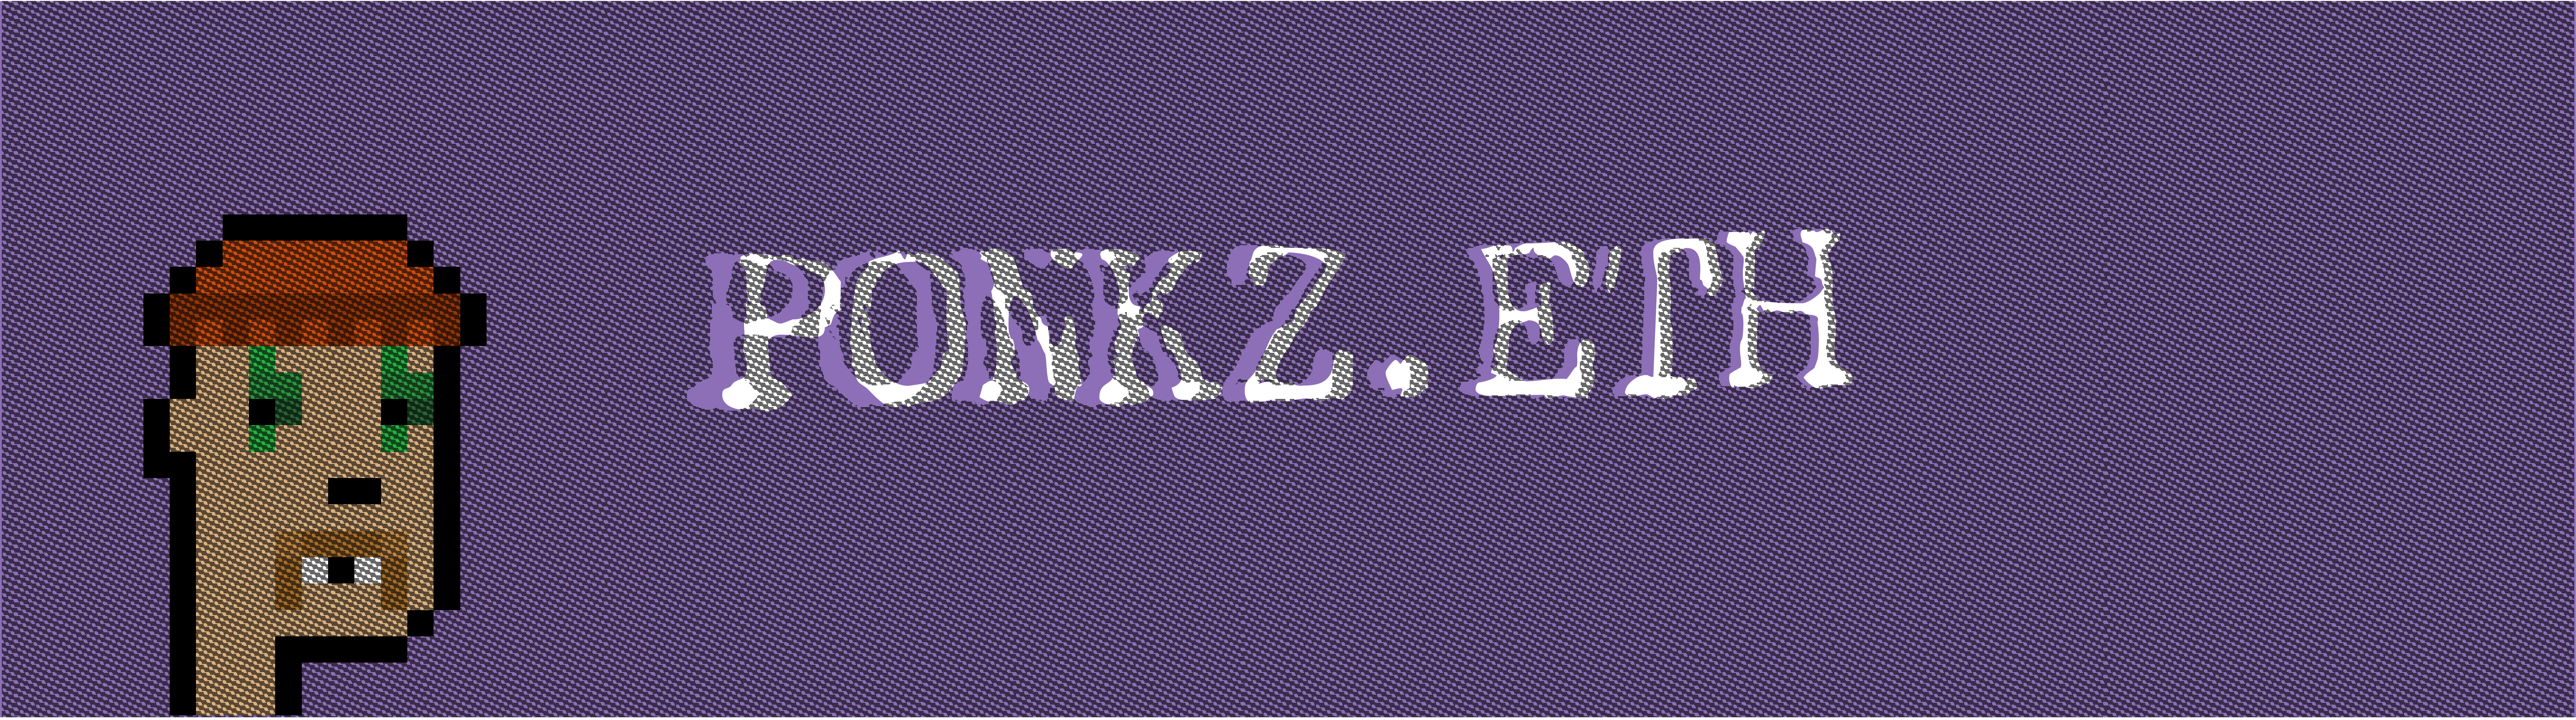 ponkz banner